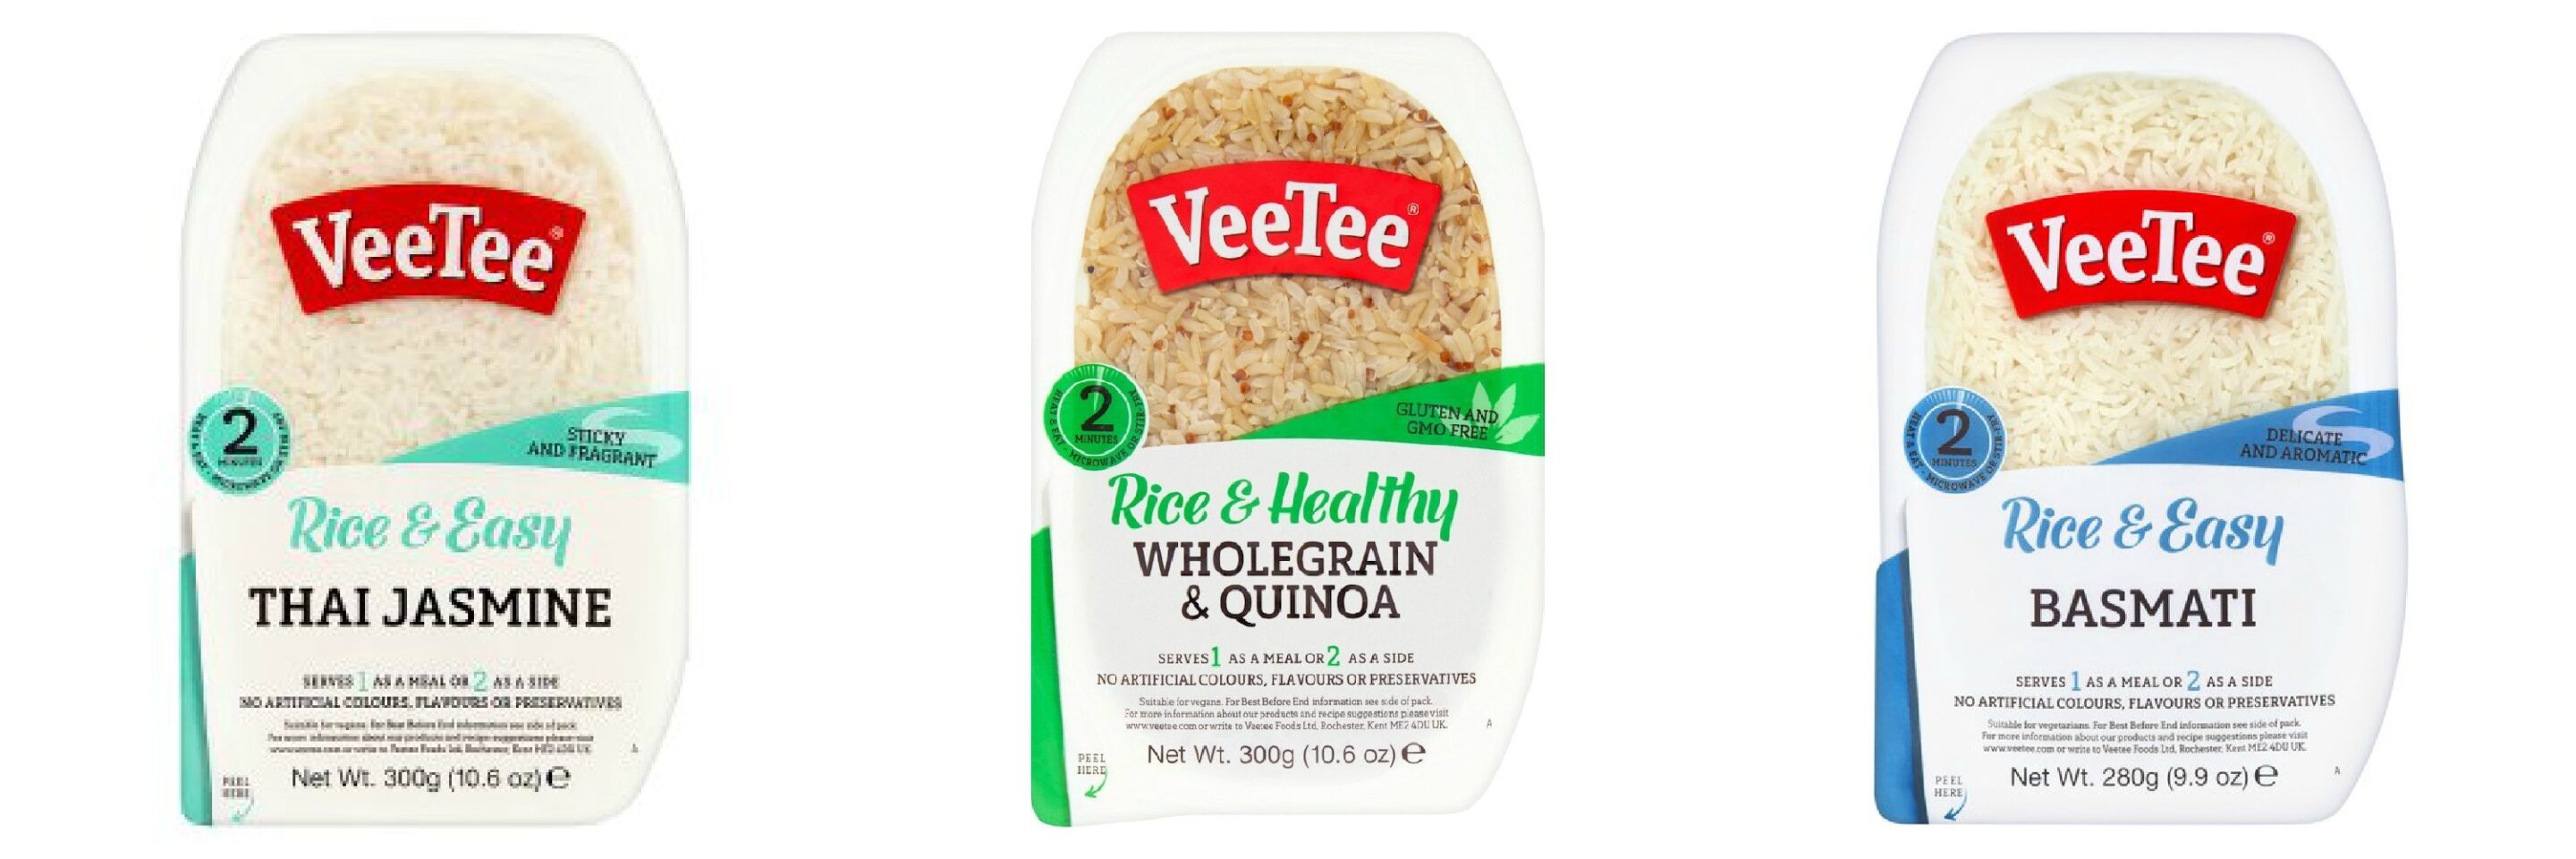 VeeTee Rice, ready in 2 minutes flat! Non-GMO.